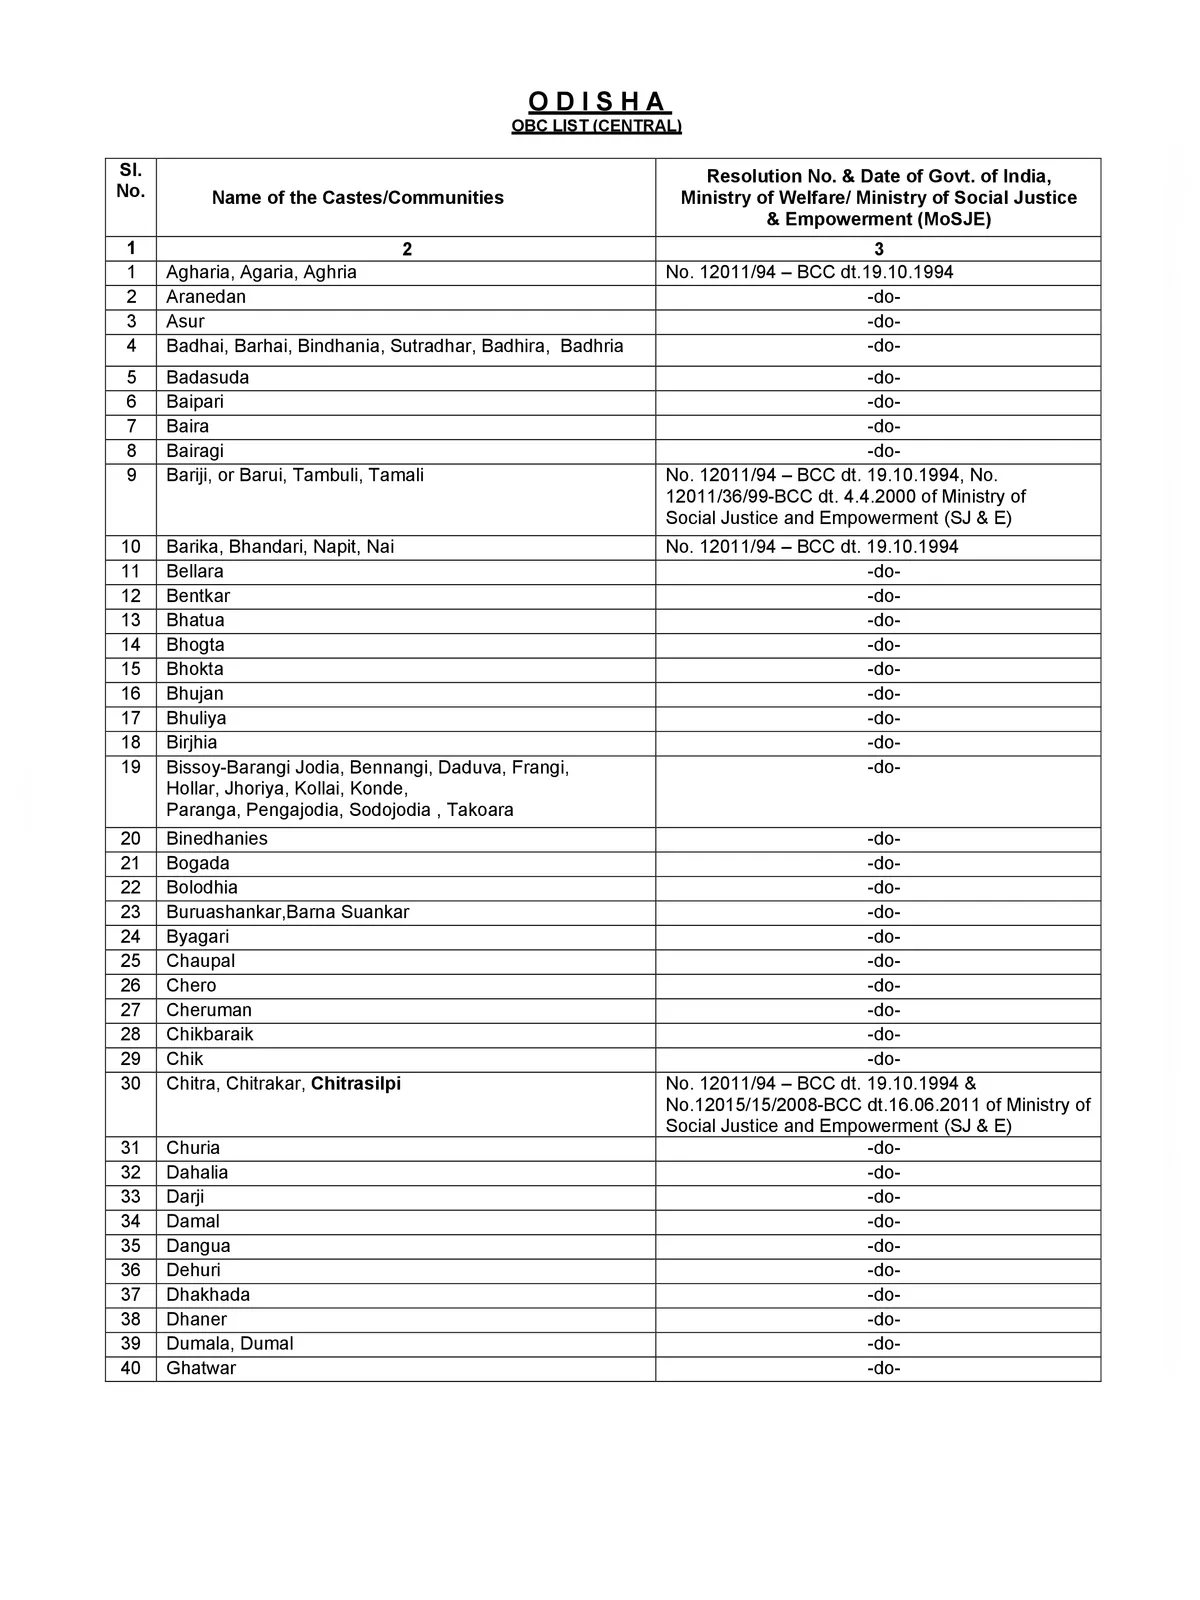 OBC List of Odisha